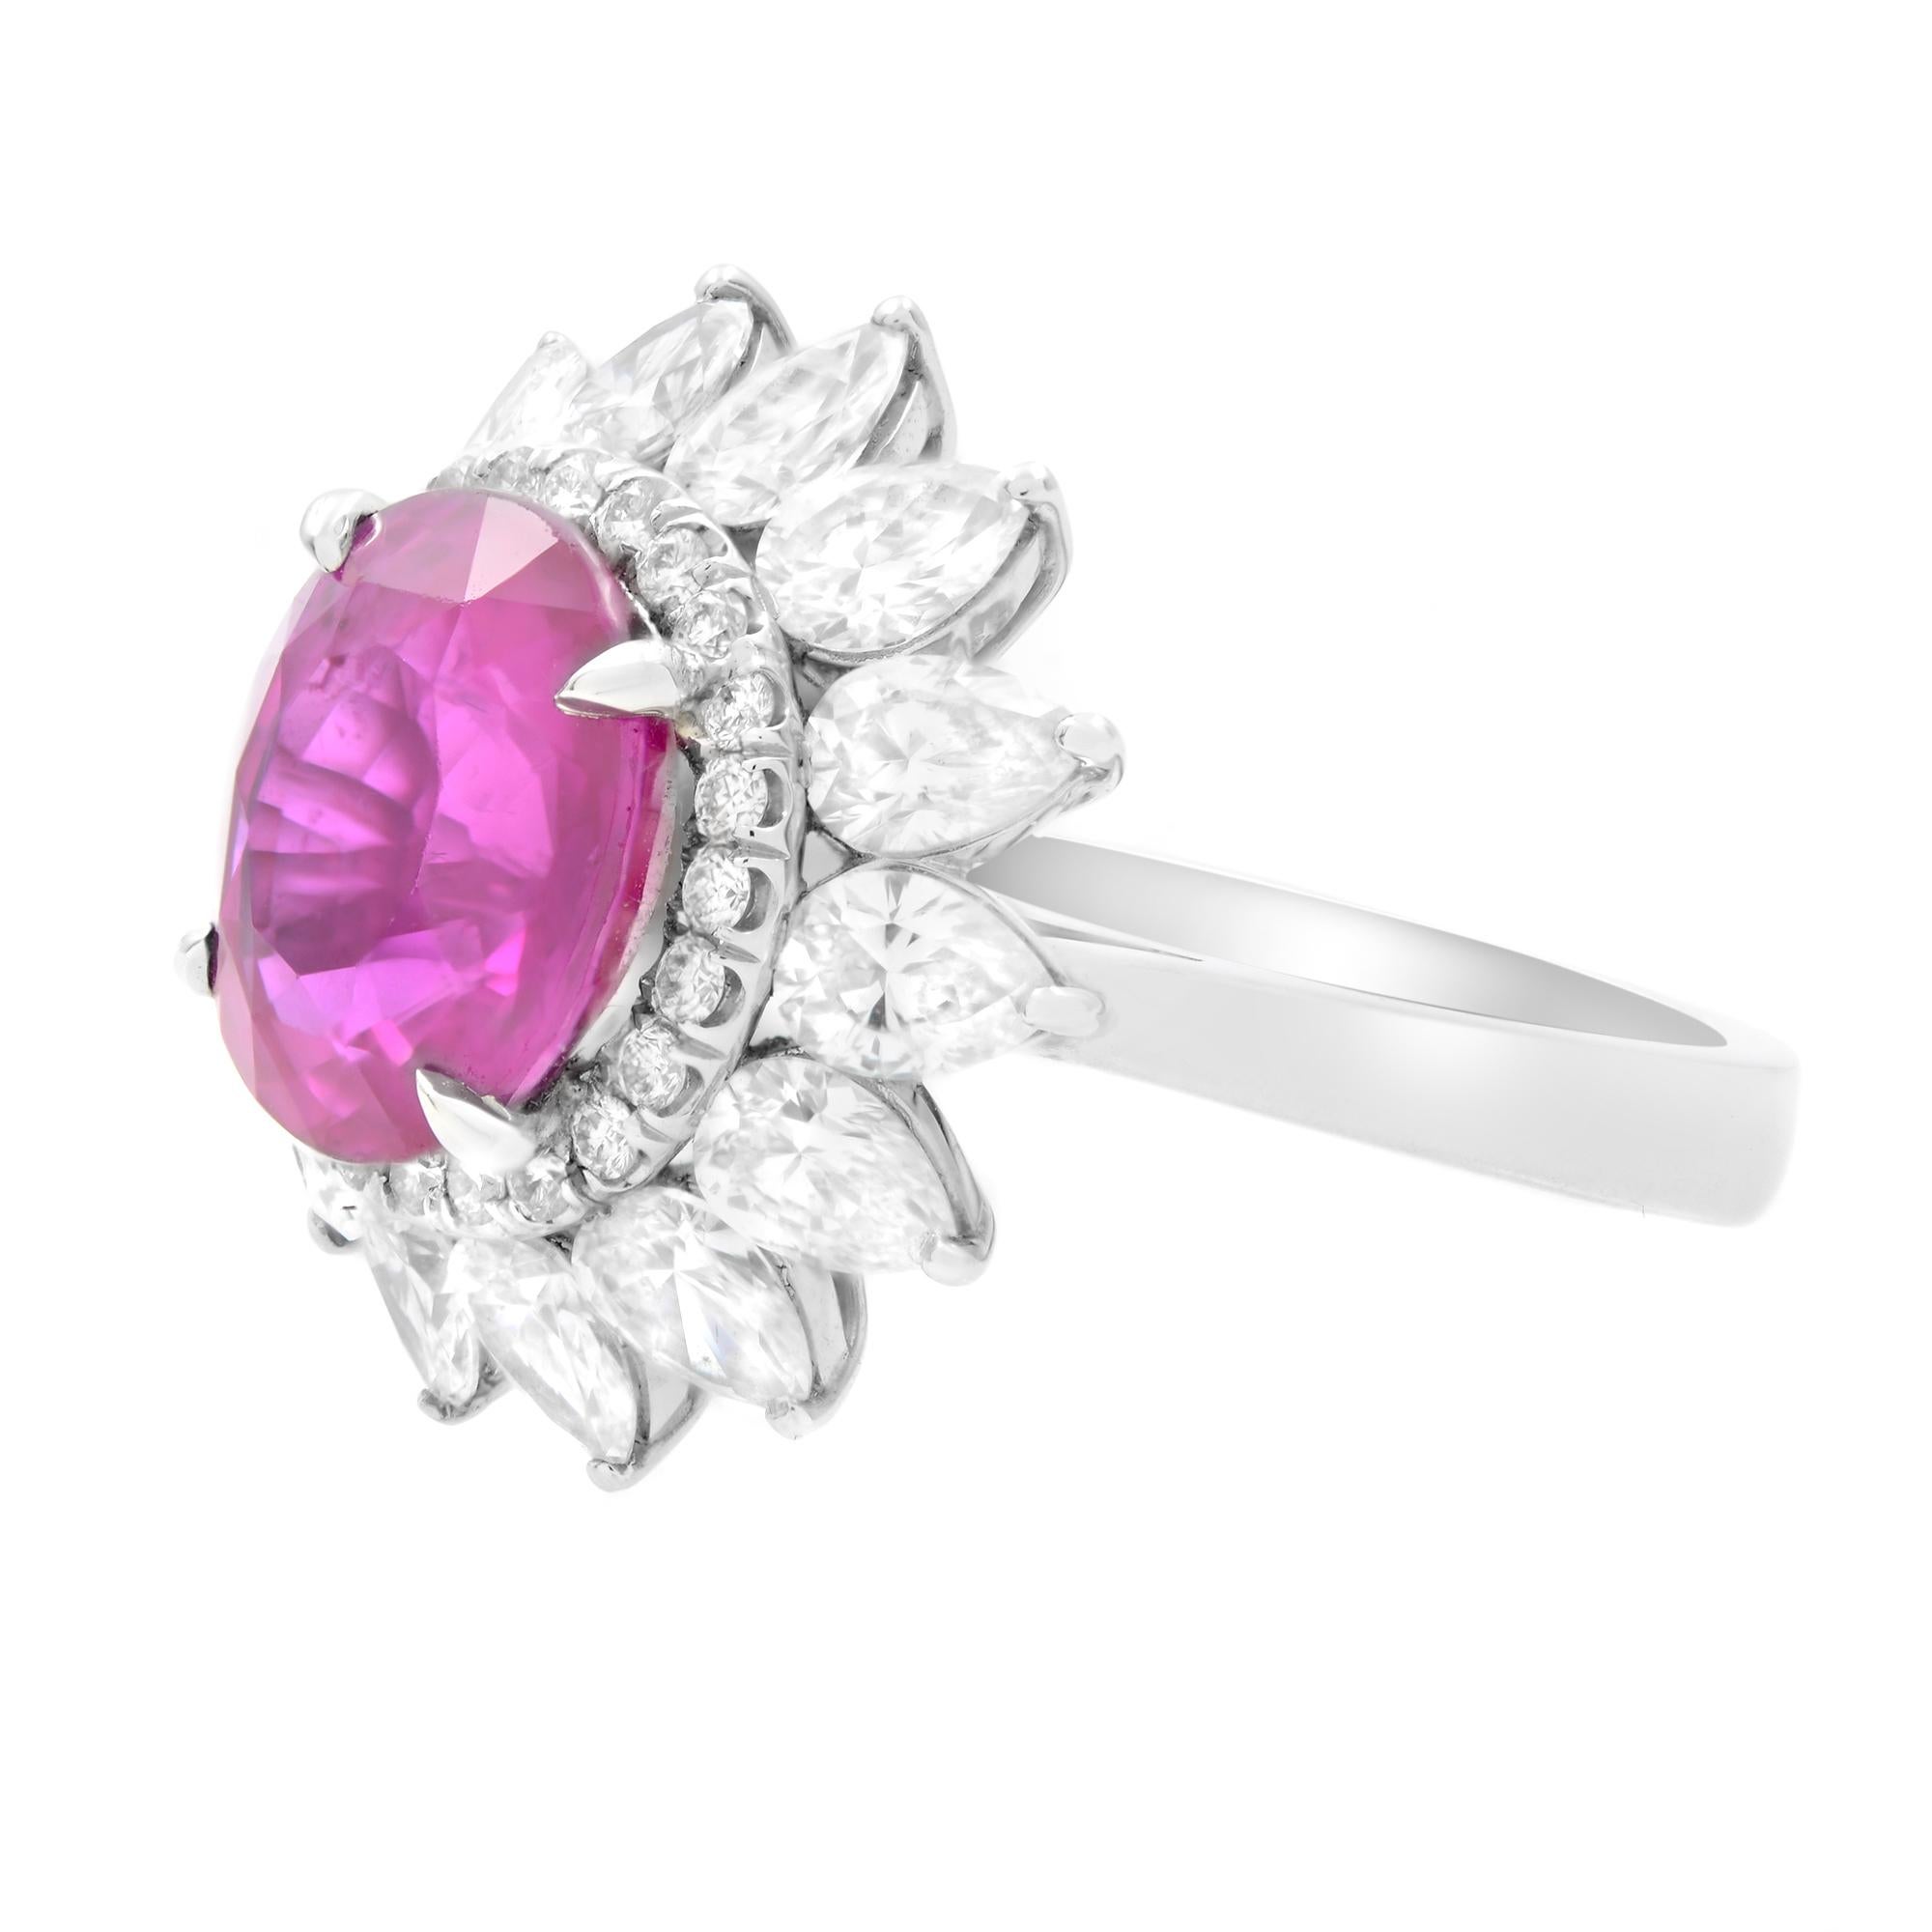 A luxurious platinum purplish pink oval sapphire diamond halo ring. Diamond halo over oval pink sapphire and more pear shaped diamond around the halo. Pink Sapphire weights, 4.47carat and diamonds are 2.40 carat. Diamond color F-G and VS clarity.